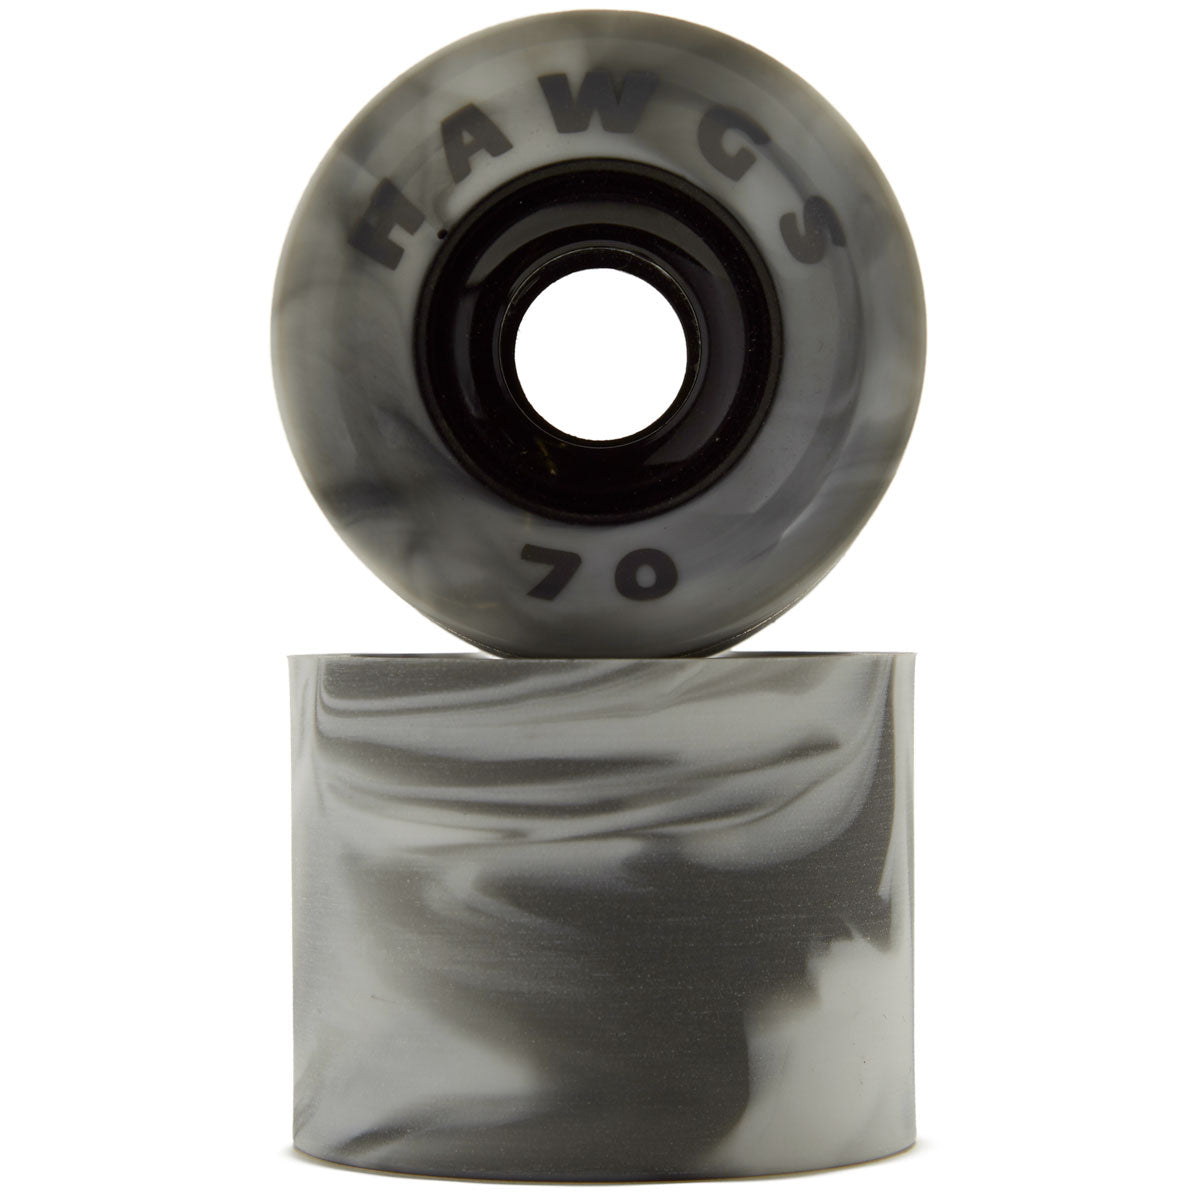 Hawgs Supreme 78a Stone Ground Longboard Wheels - Grey/White - 70mm image 2